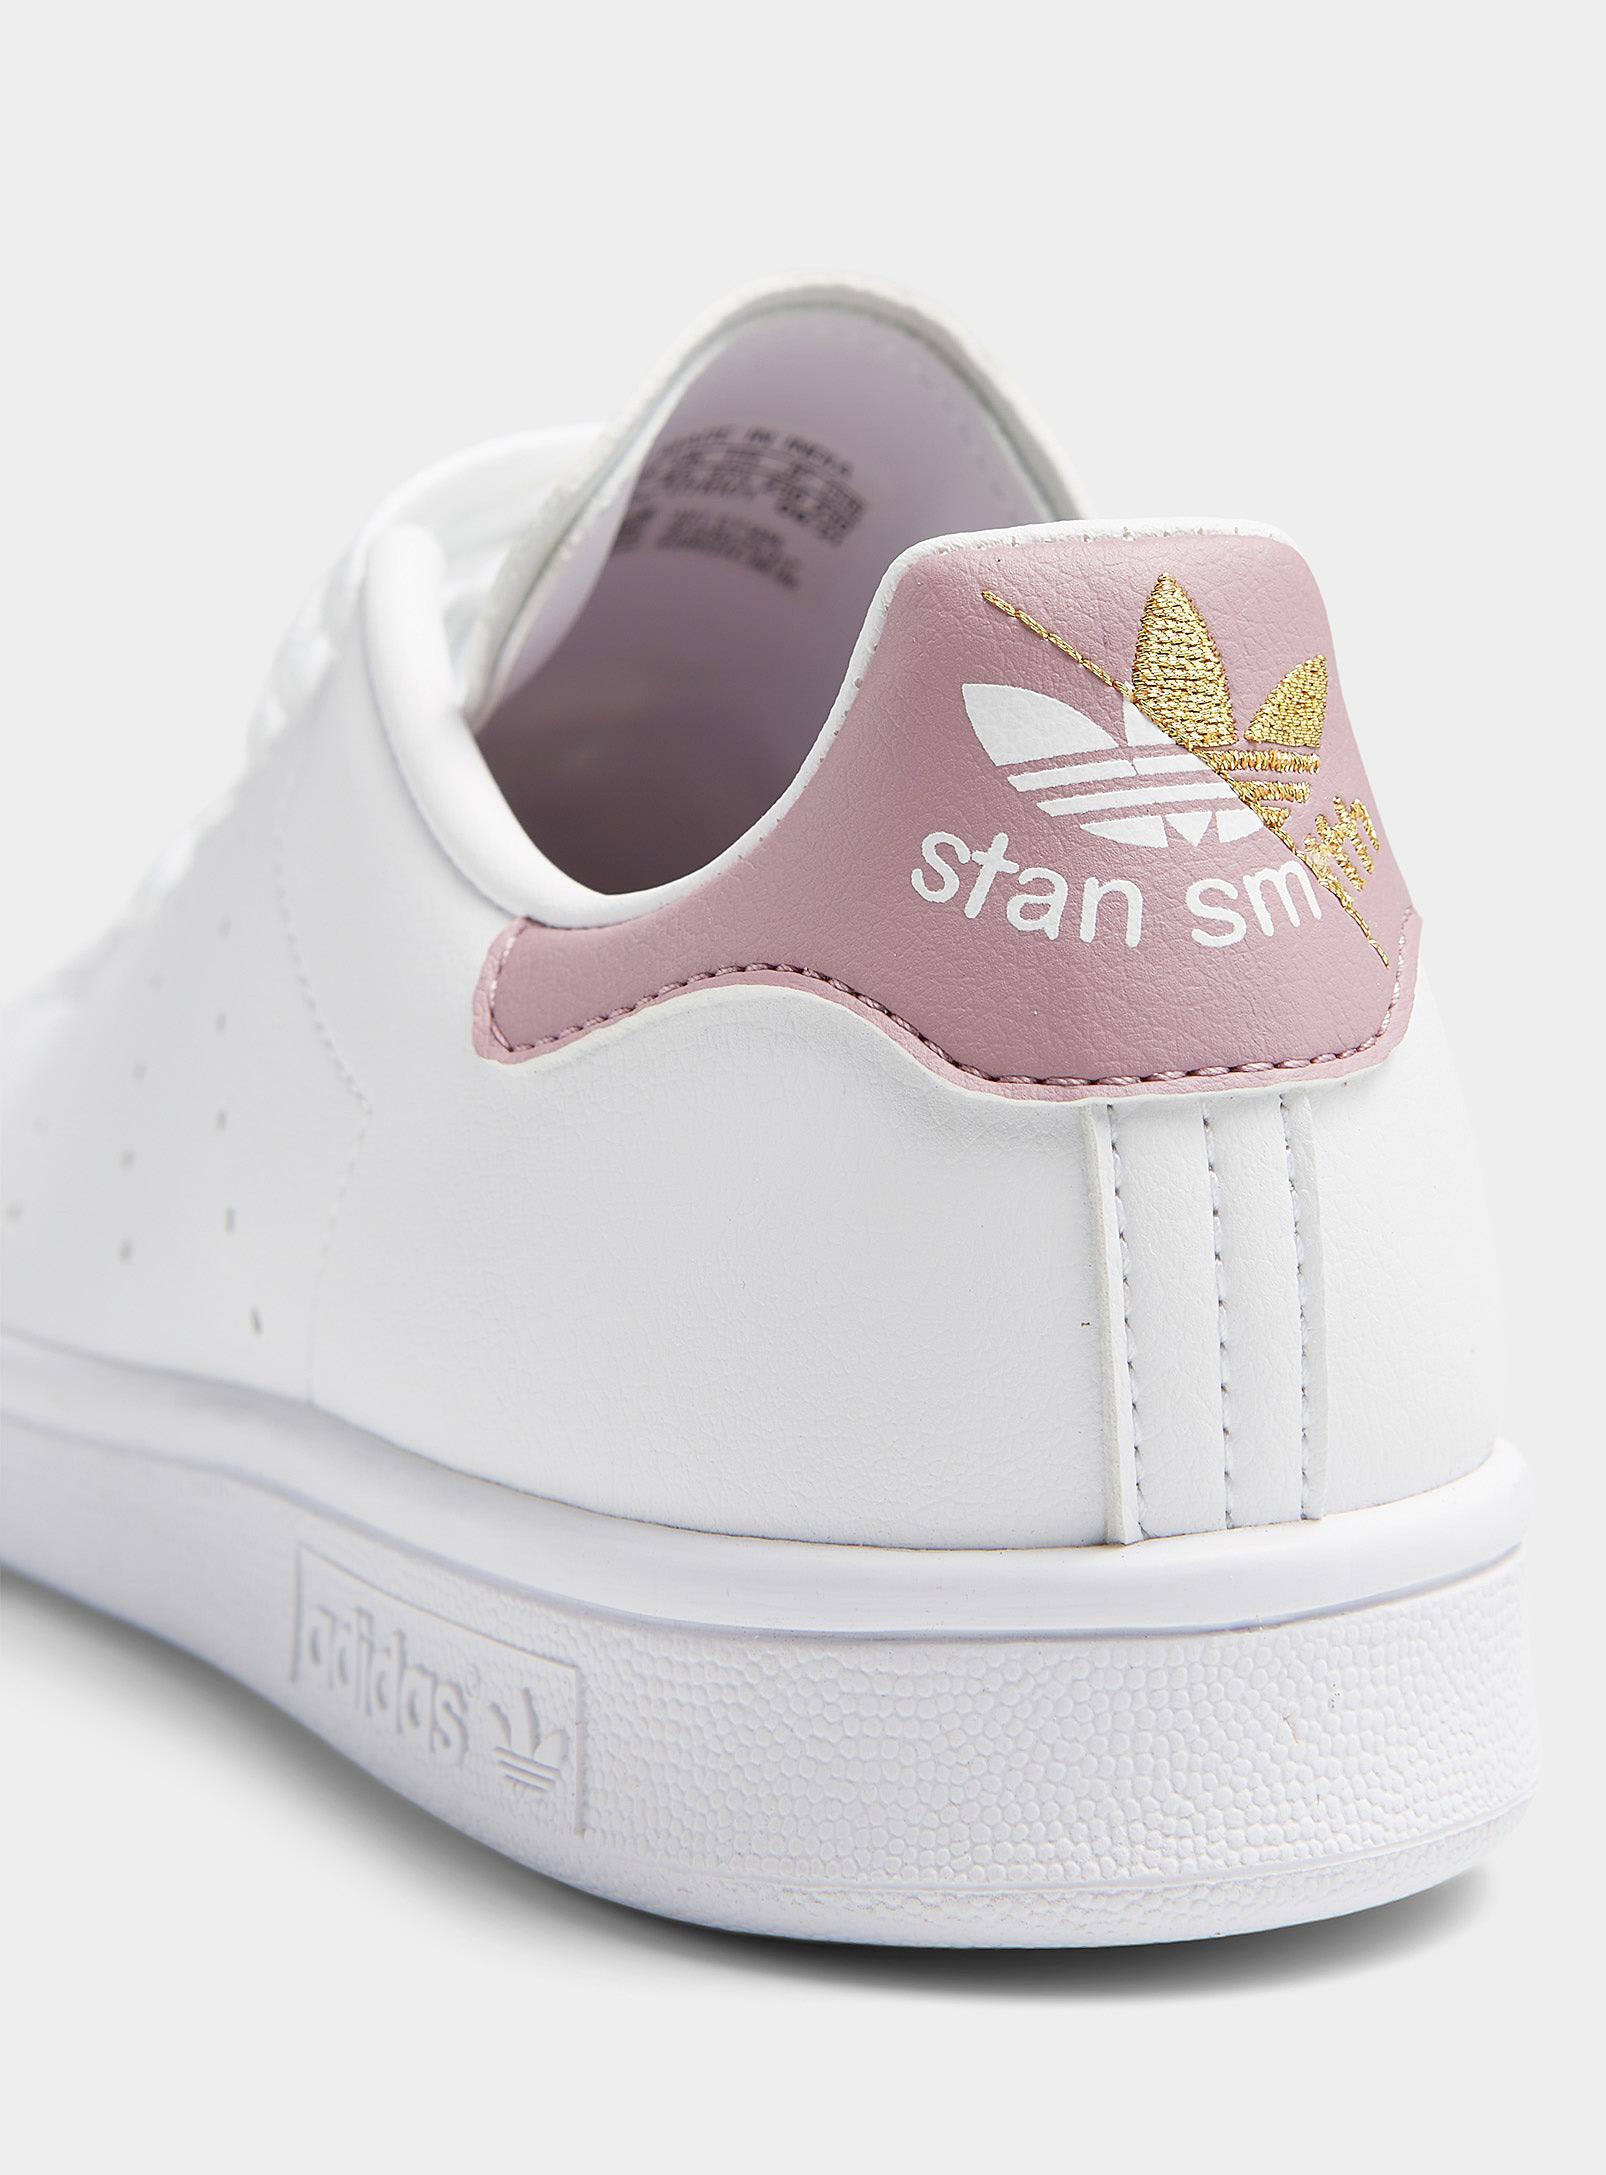 adidas, Shoes, Pink Rose Gold Metallic Stan Smith Adidas Sneakers 7